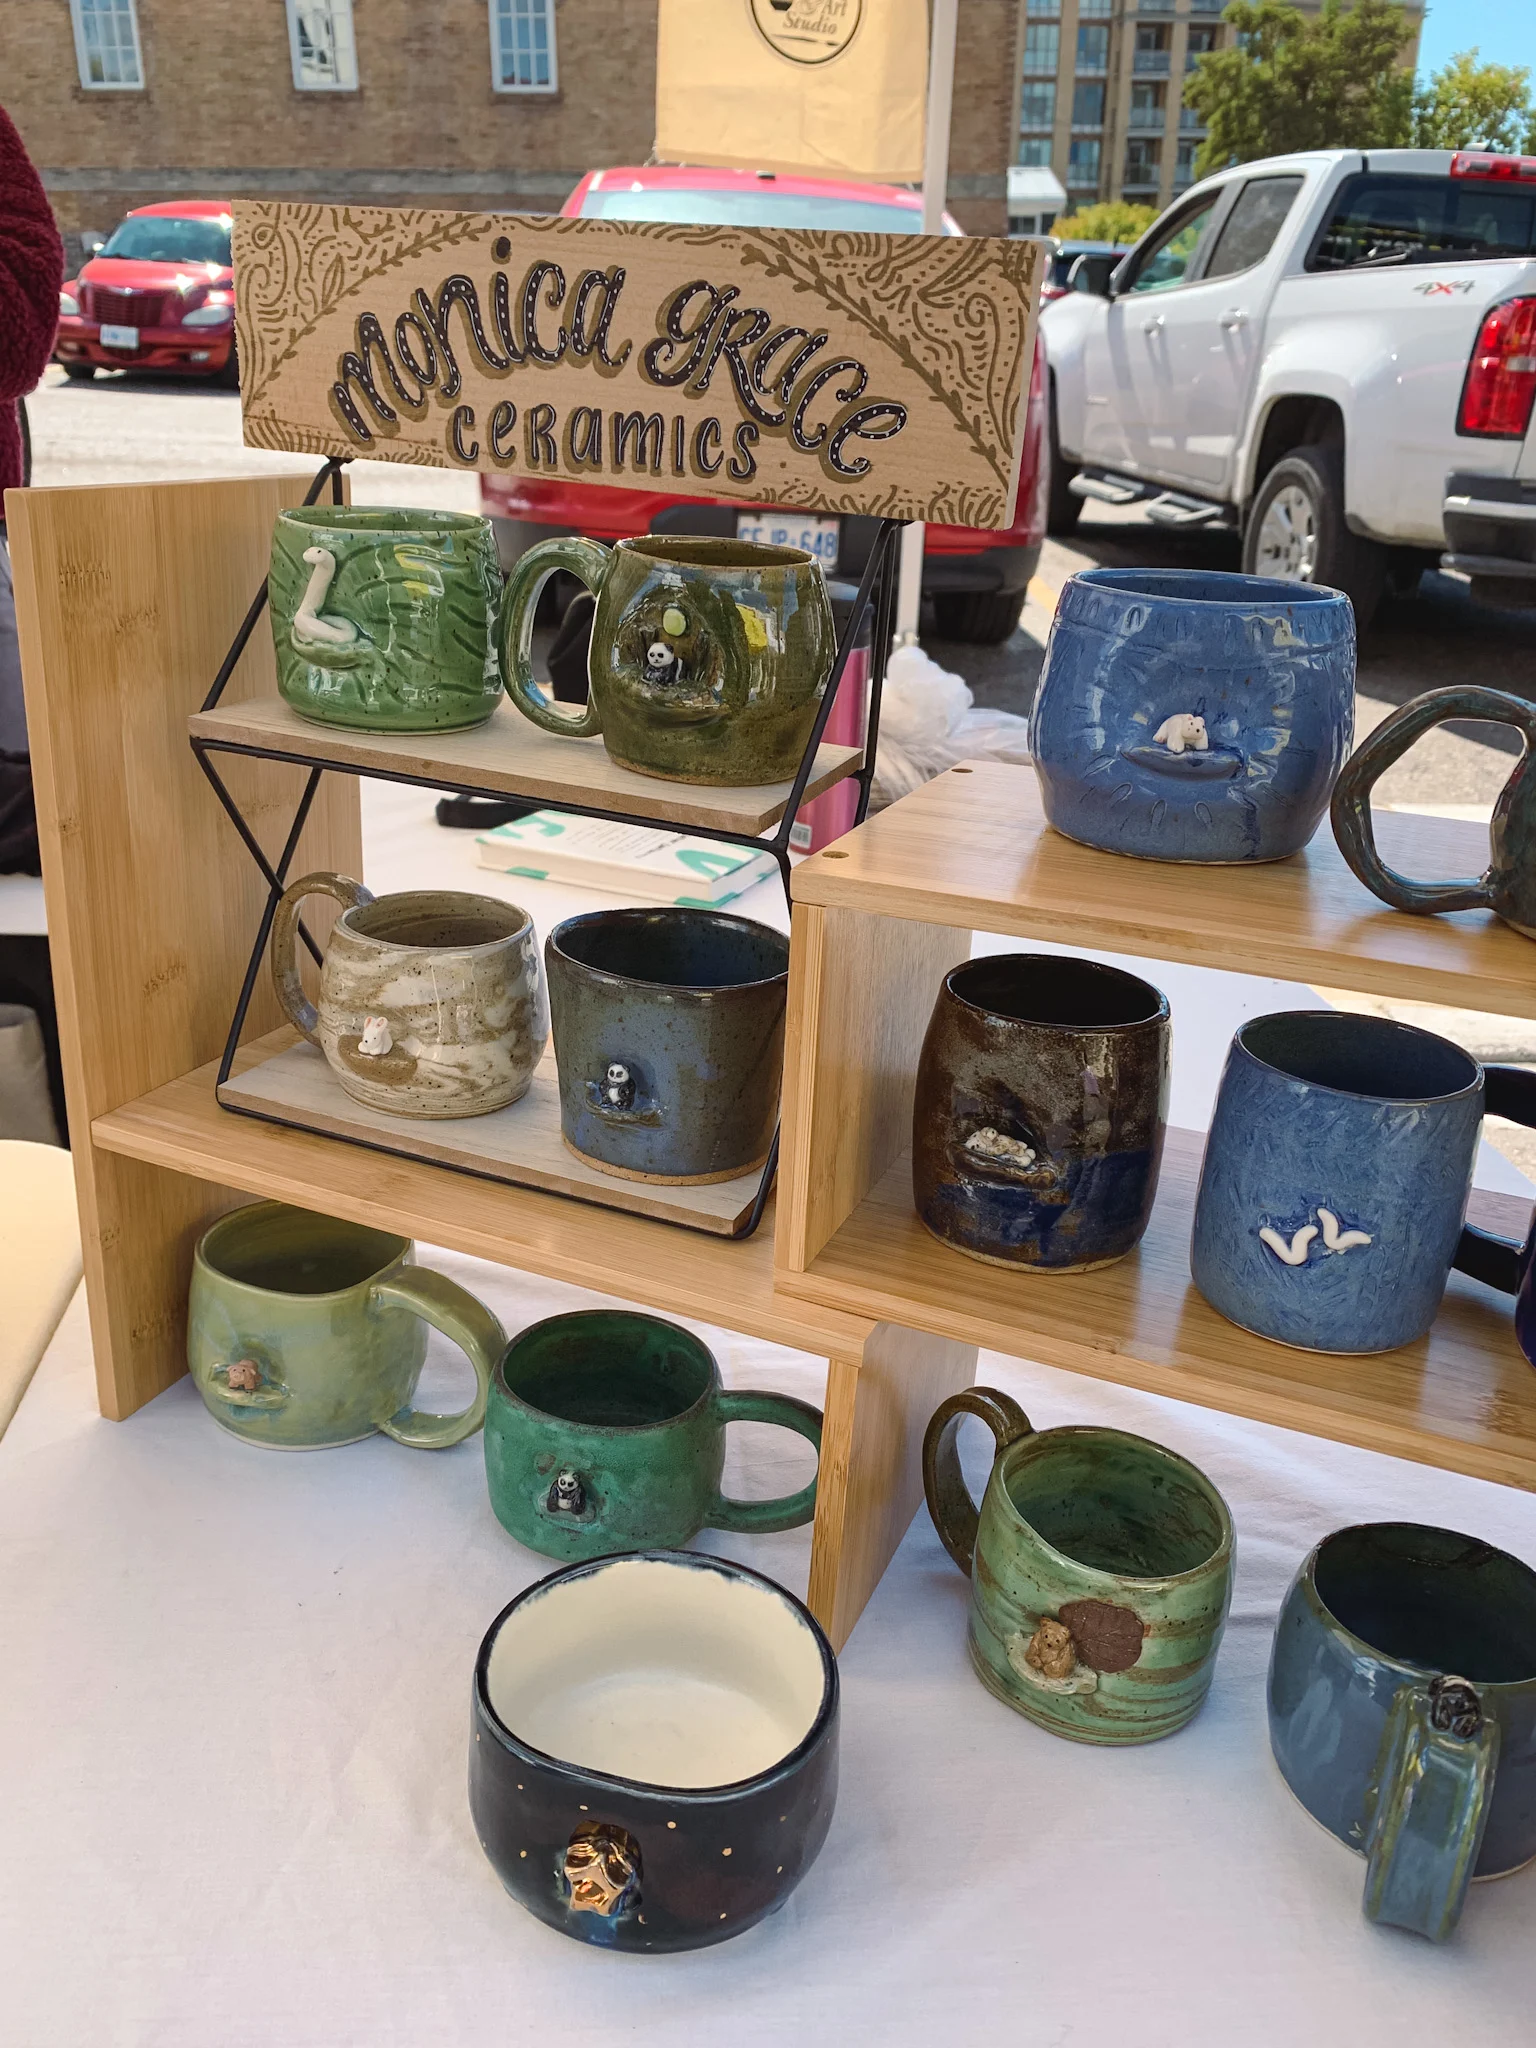 Ceramic mugs from Monica Grace Ceramics at Markham Farmers' Market in Markham, Ontario